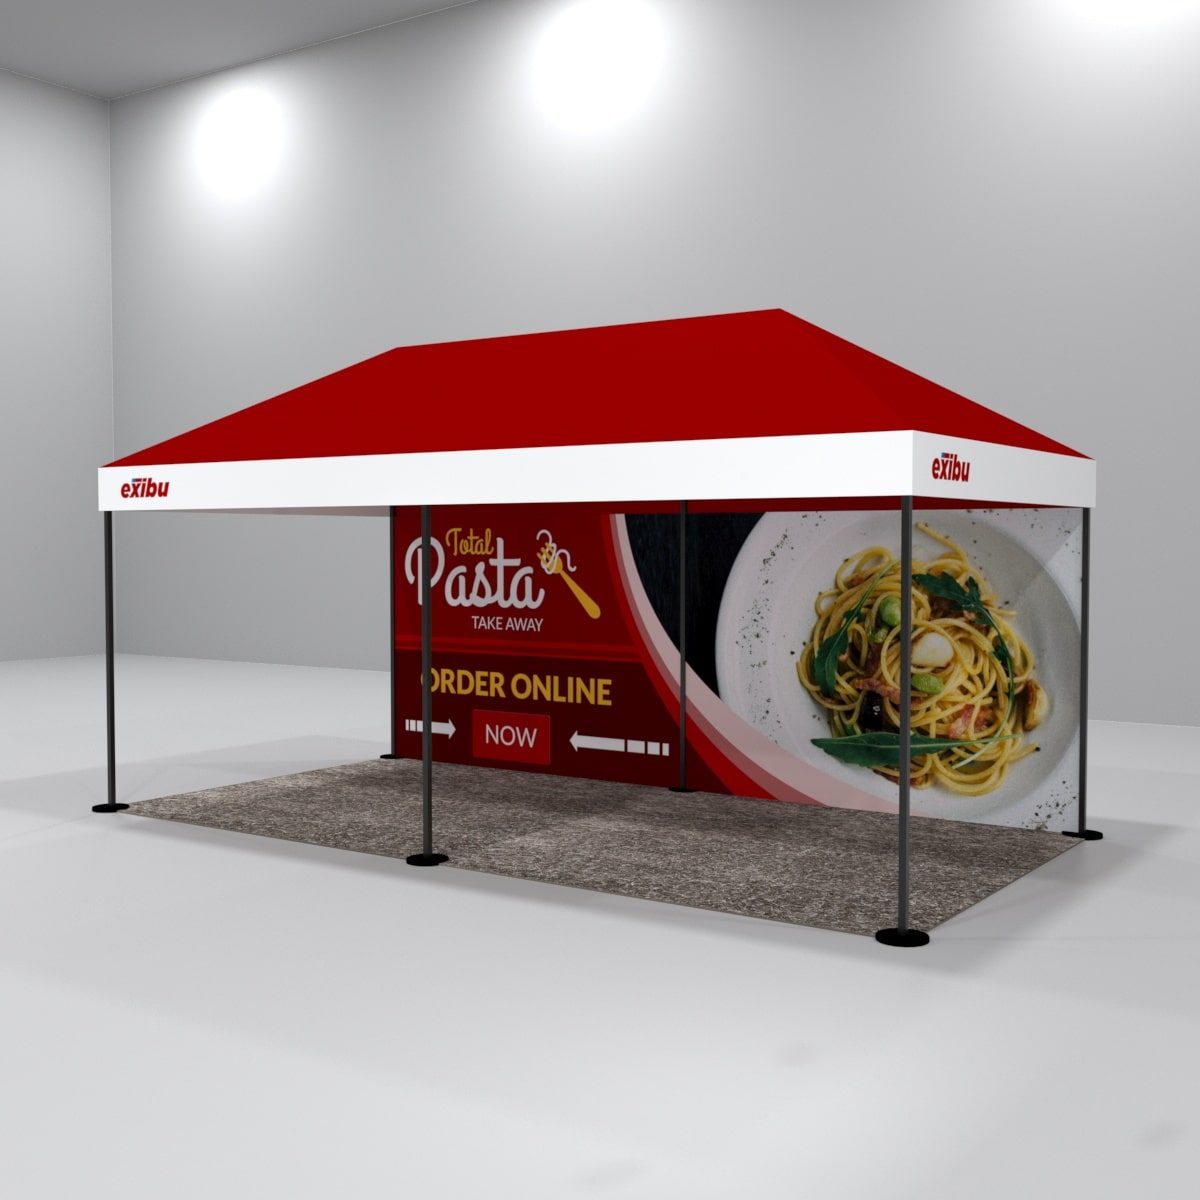 Kit 3 – 3X6 M Gazebo Tent With Backdrop And Top Facia Print